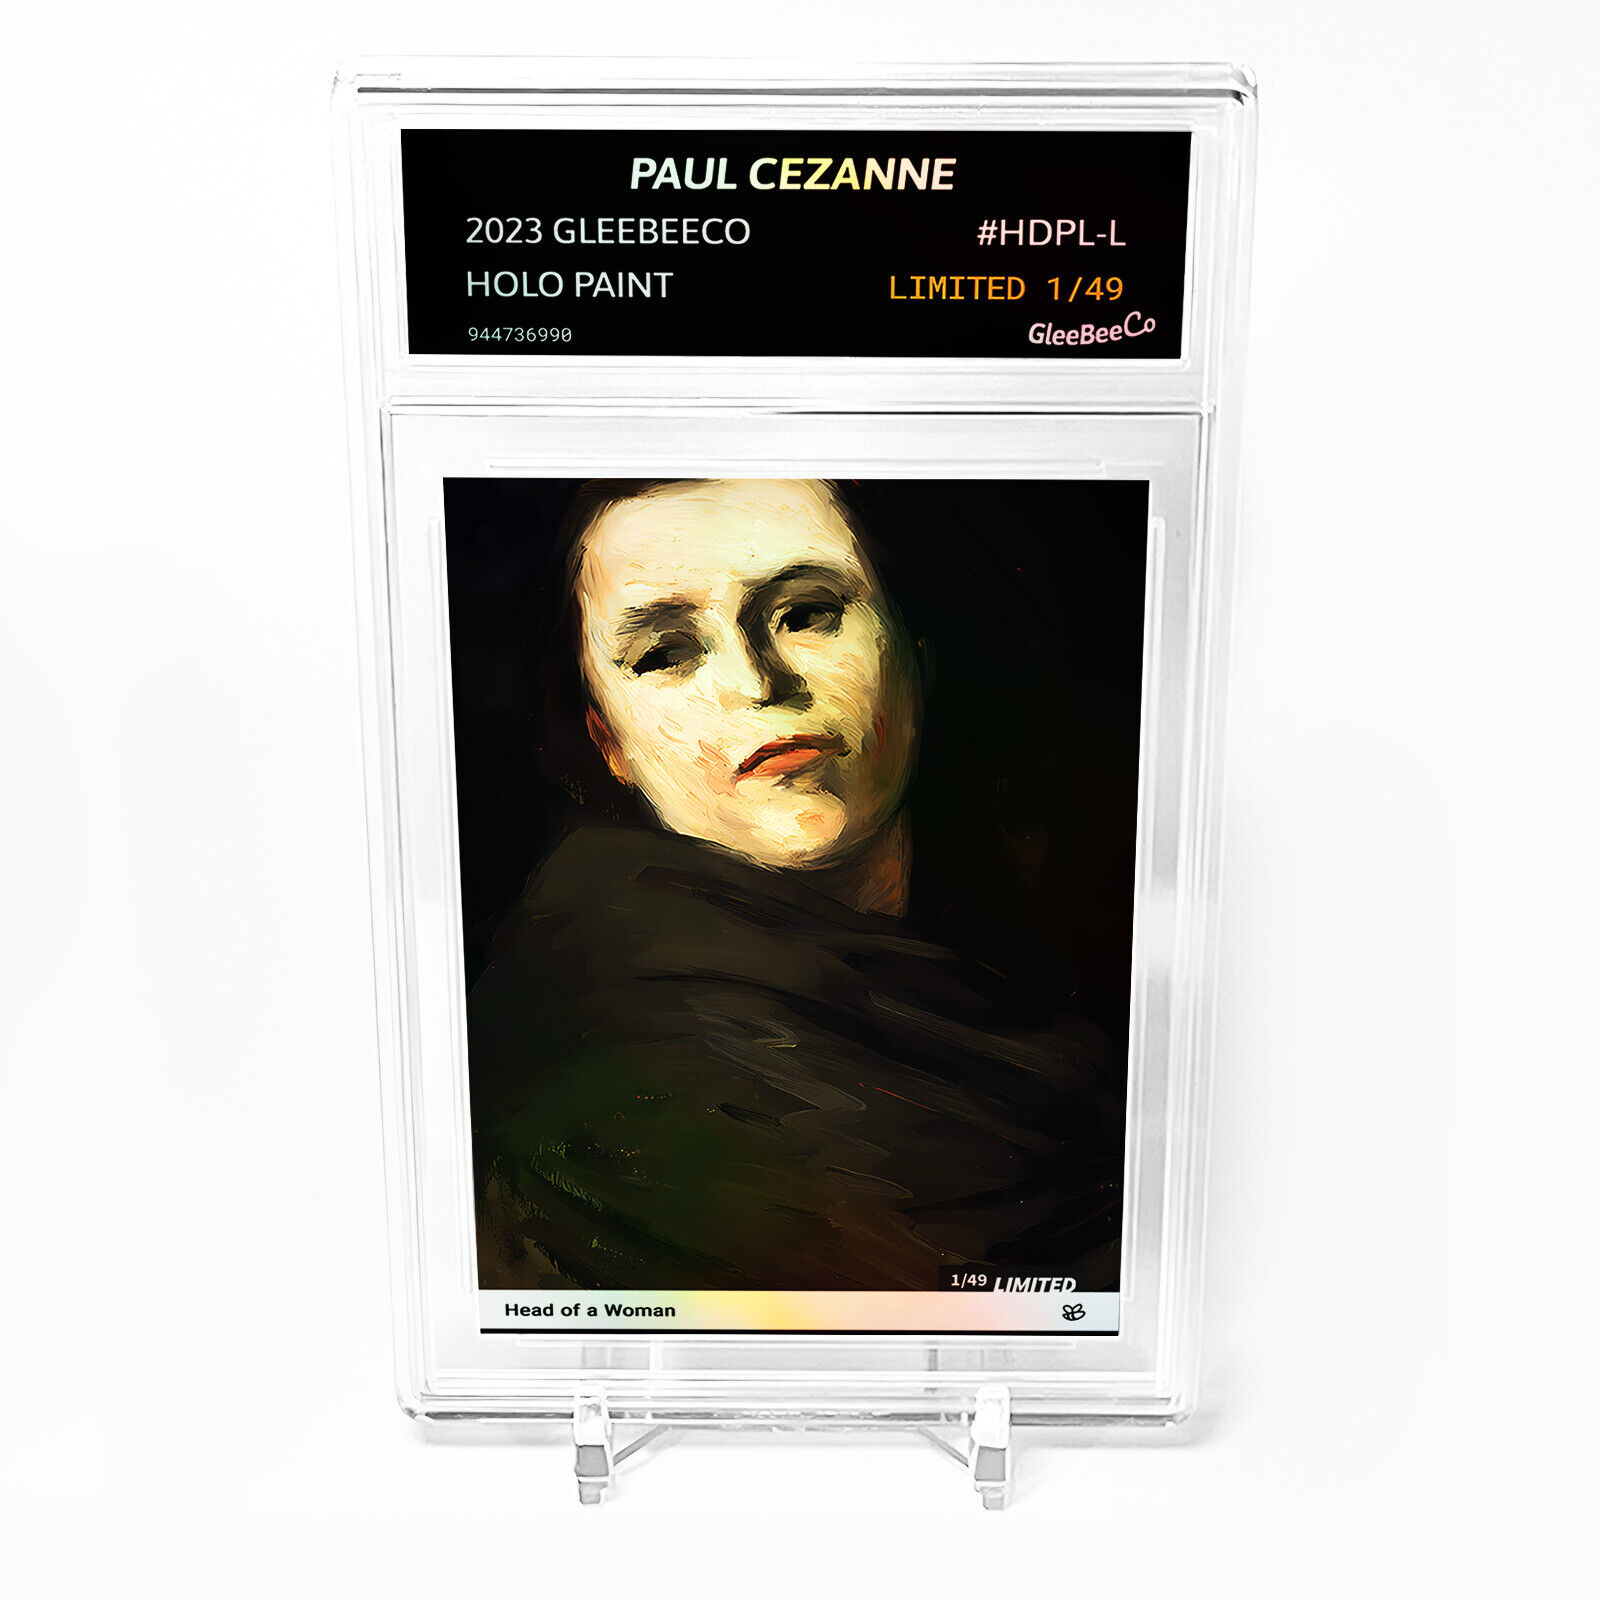 HEAD OF A WOMAN (Paul Cezanne) Painting Card 2023 GleeBeeCo Holo #HDPL-L /49